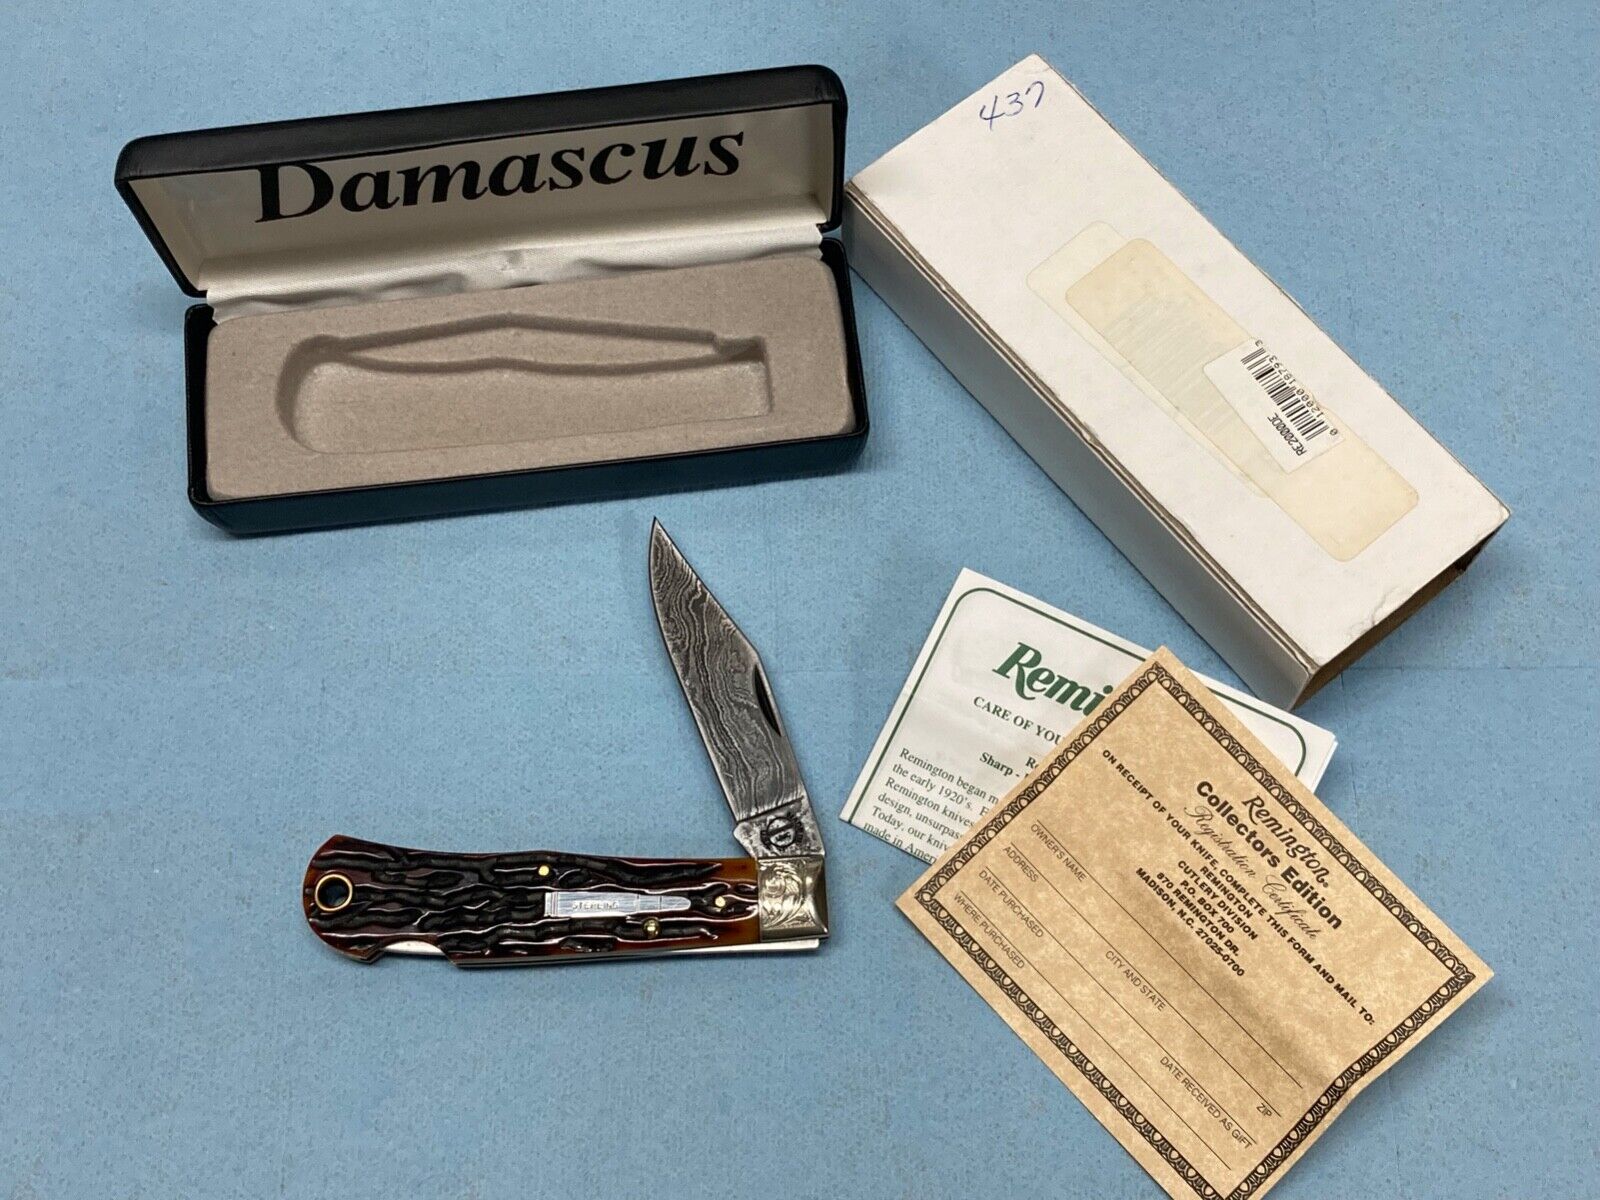 Remington 1999 DAMASCUS - R1303-DE - Engraved Sterling Silver Bullet Knife